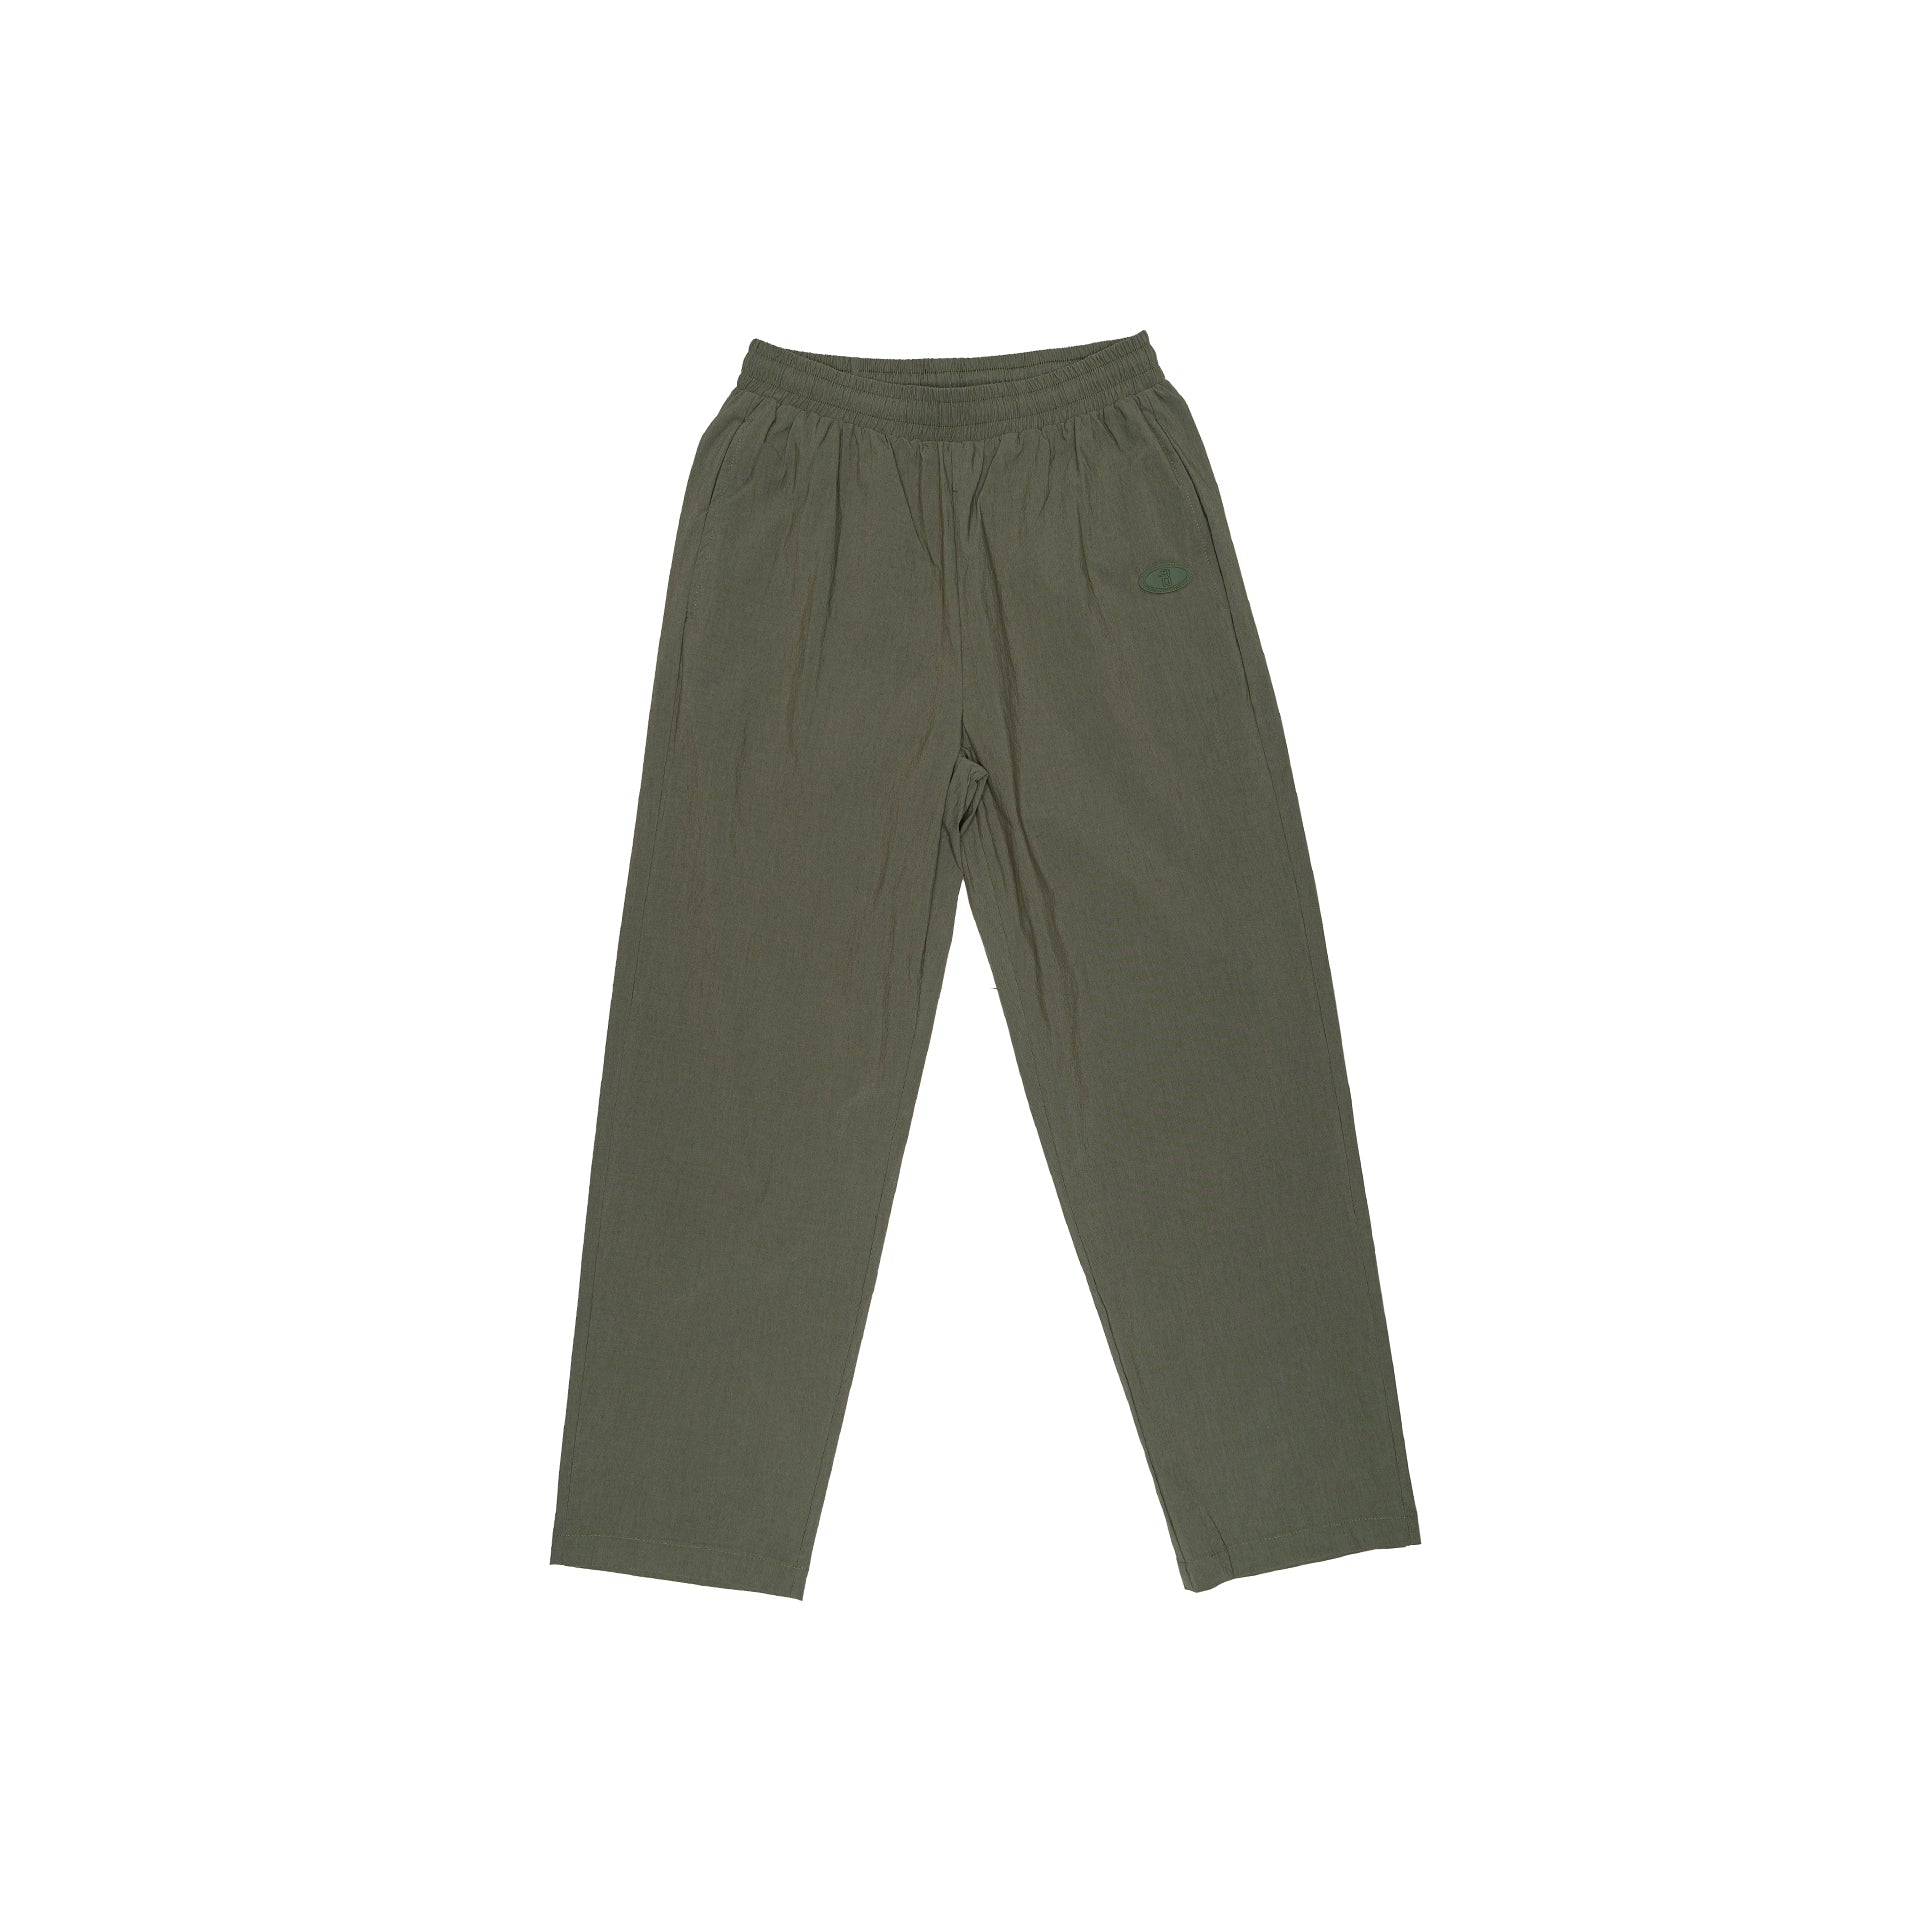 Green Premium Pants by Brandtionary